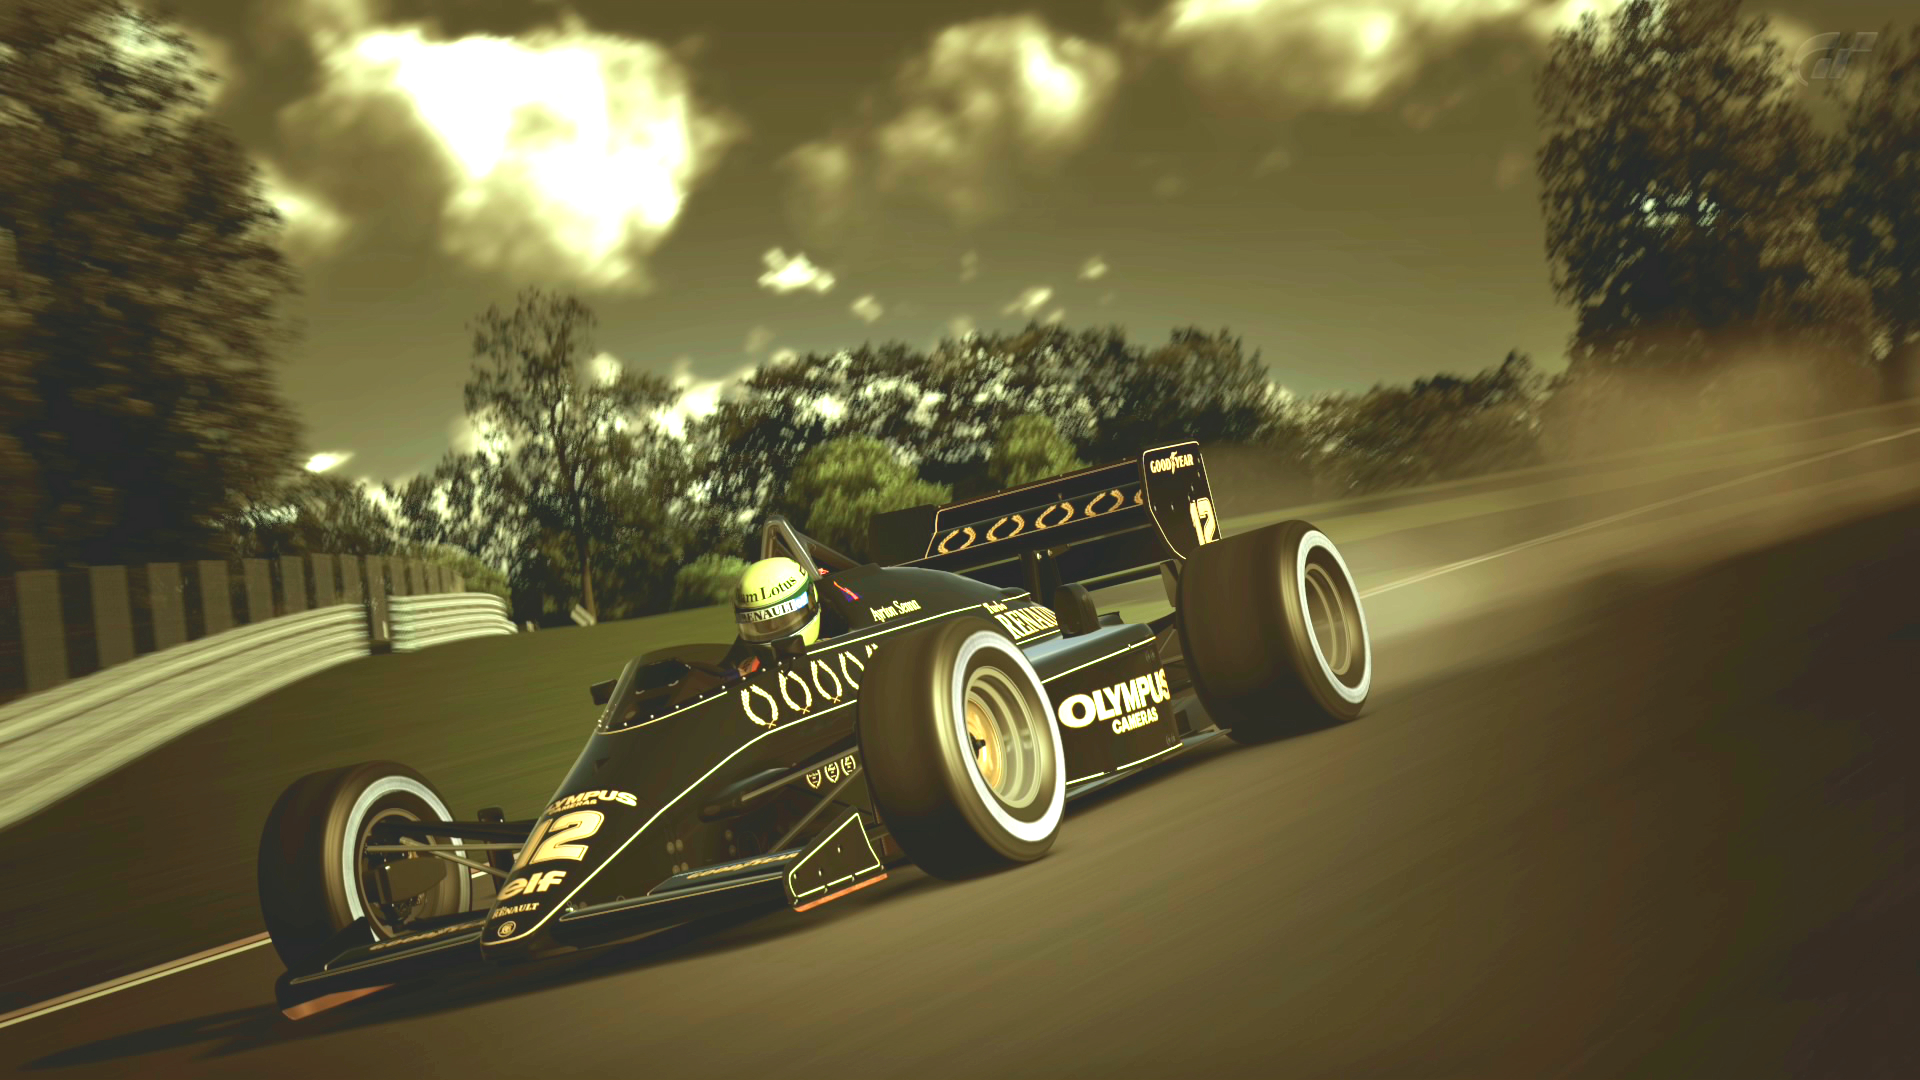 General 1920x1080 Lotus Ayrton Senna Gran Turismo 6 Formula 1 race cars livery video games Racing driver Polyphony Digital British cars